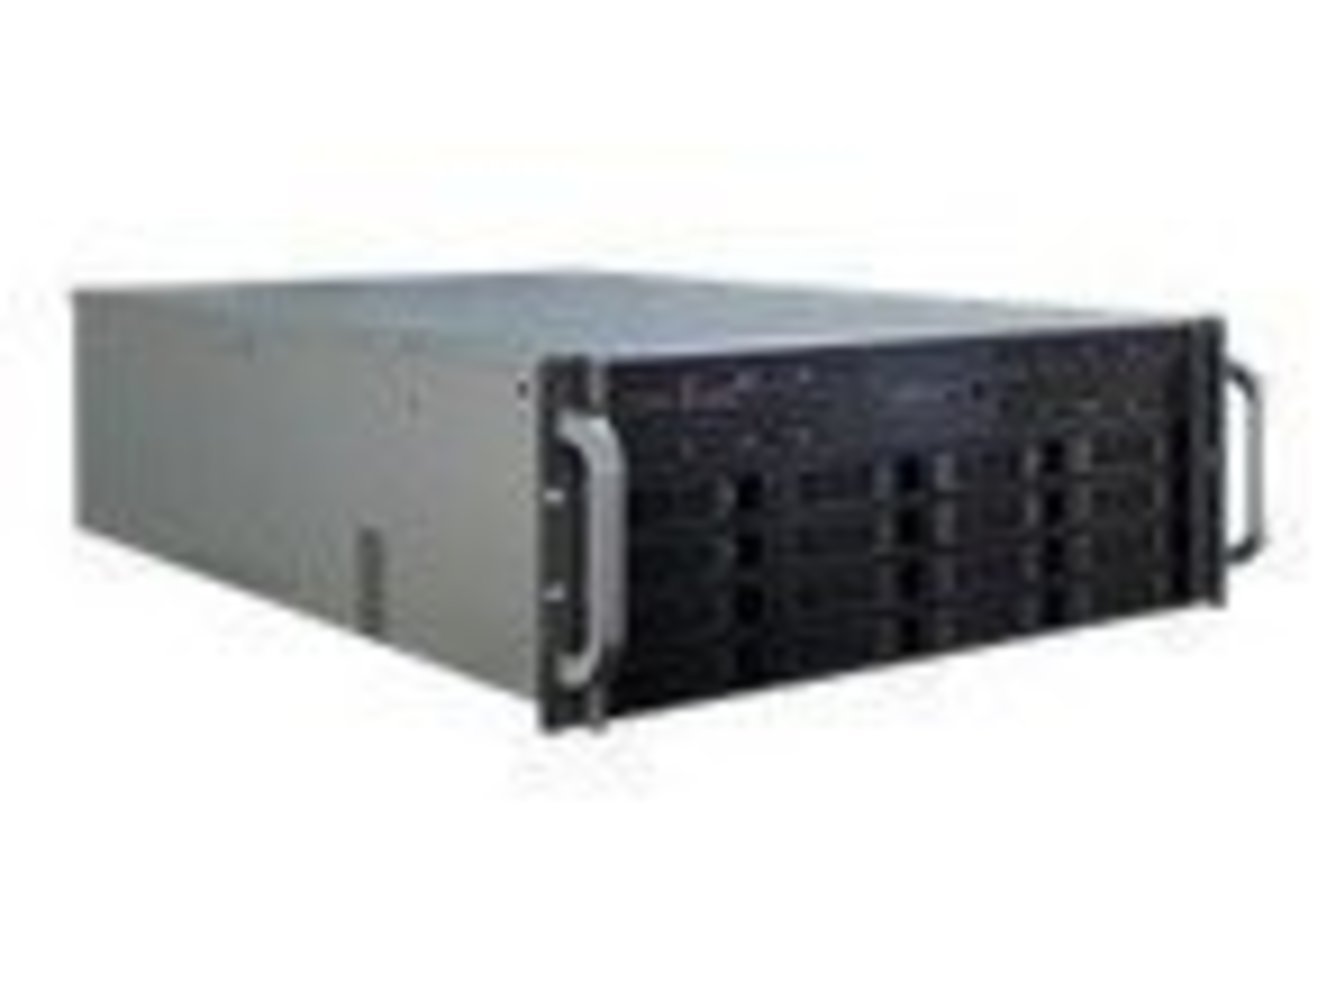  IPC 4U-4416 48.26cm 19 Zoll 4HE Storage Rackmount-Gehaeuse 2x 5.25 ext 16x 2.5 o 3.5 ext 4x 2.5 int o PSU